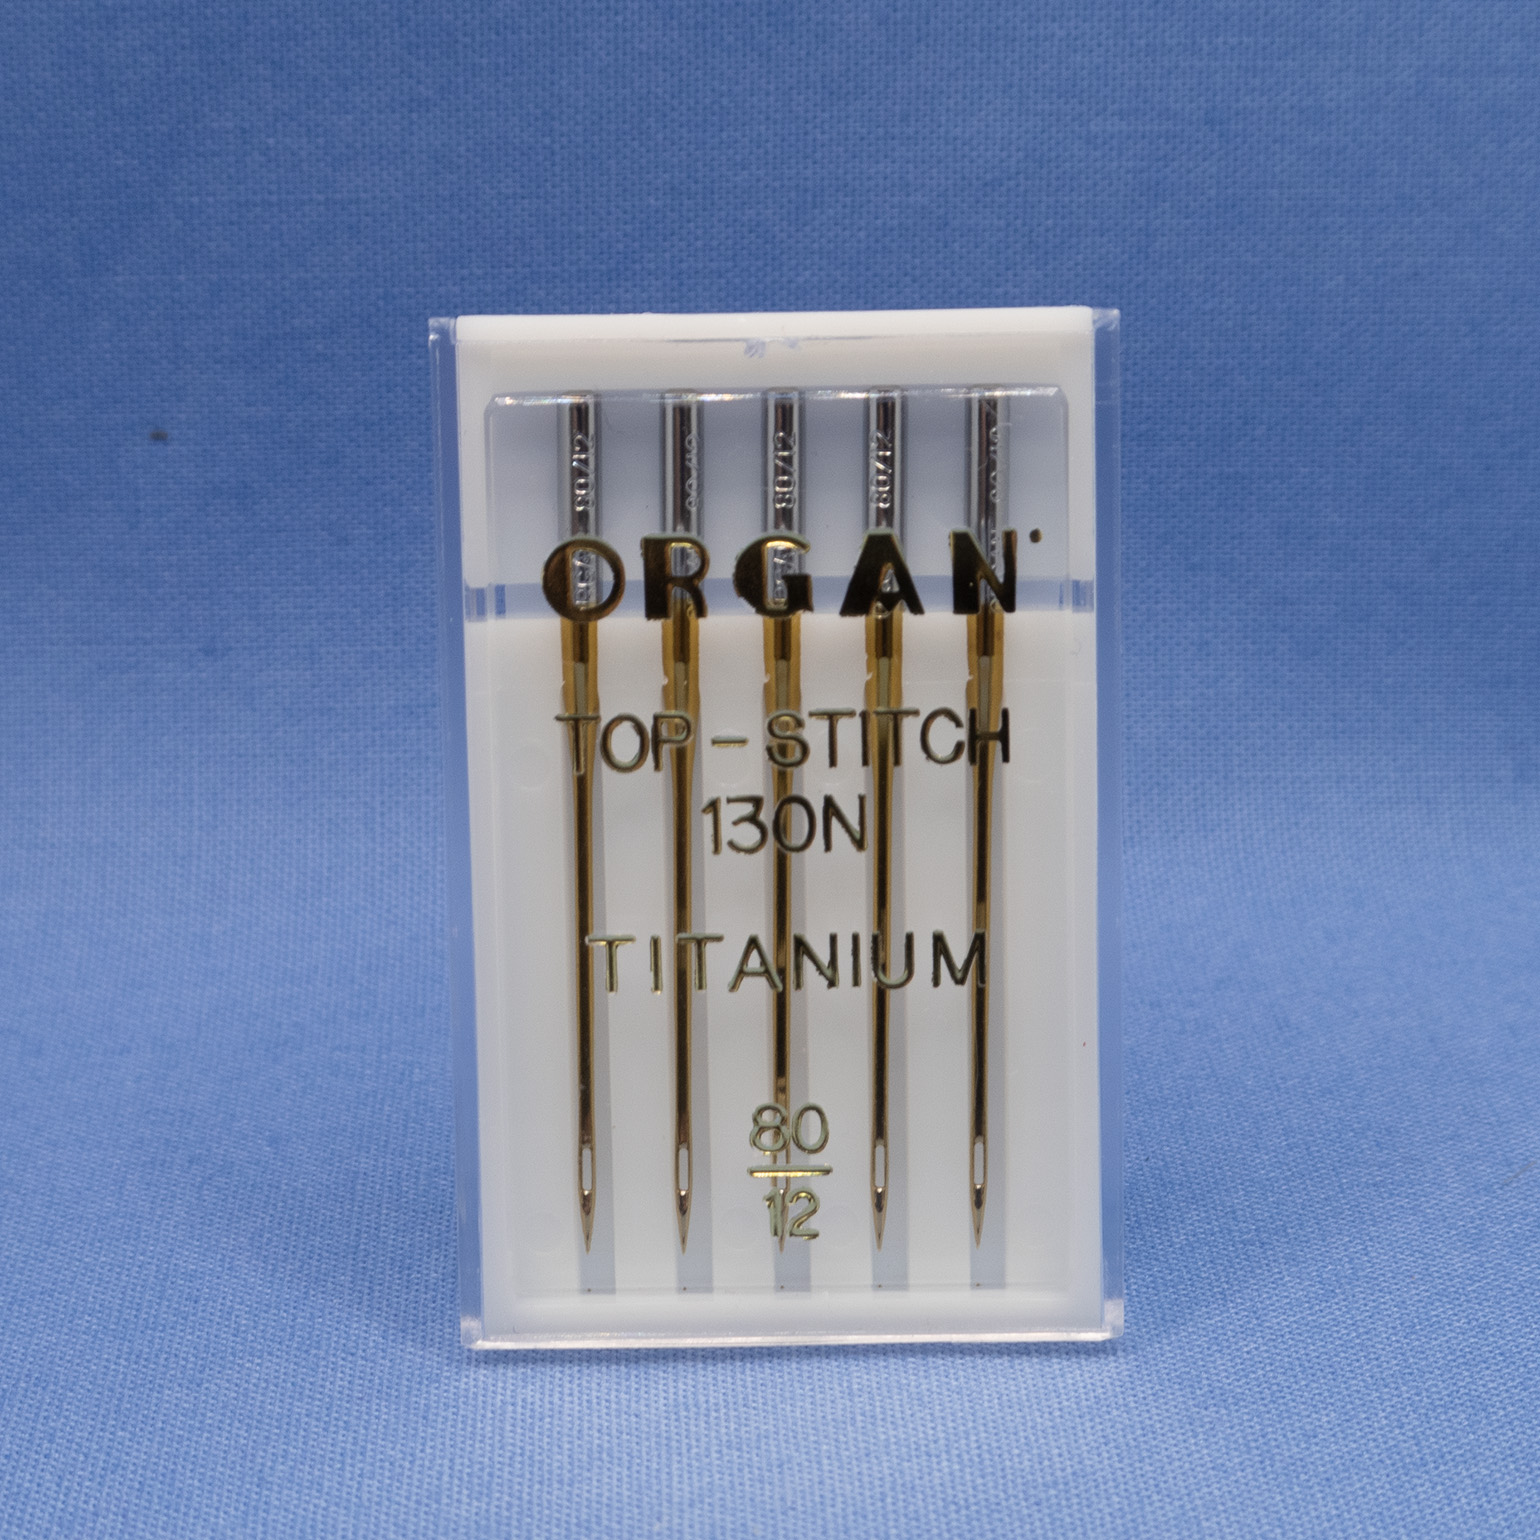 Organ Needles                 TOP STITCH 130N Titanium Size: 12/80 